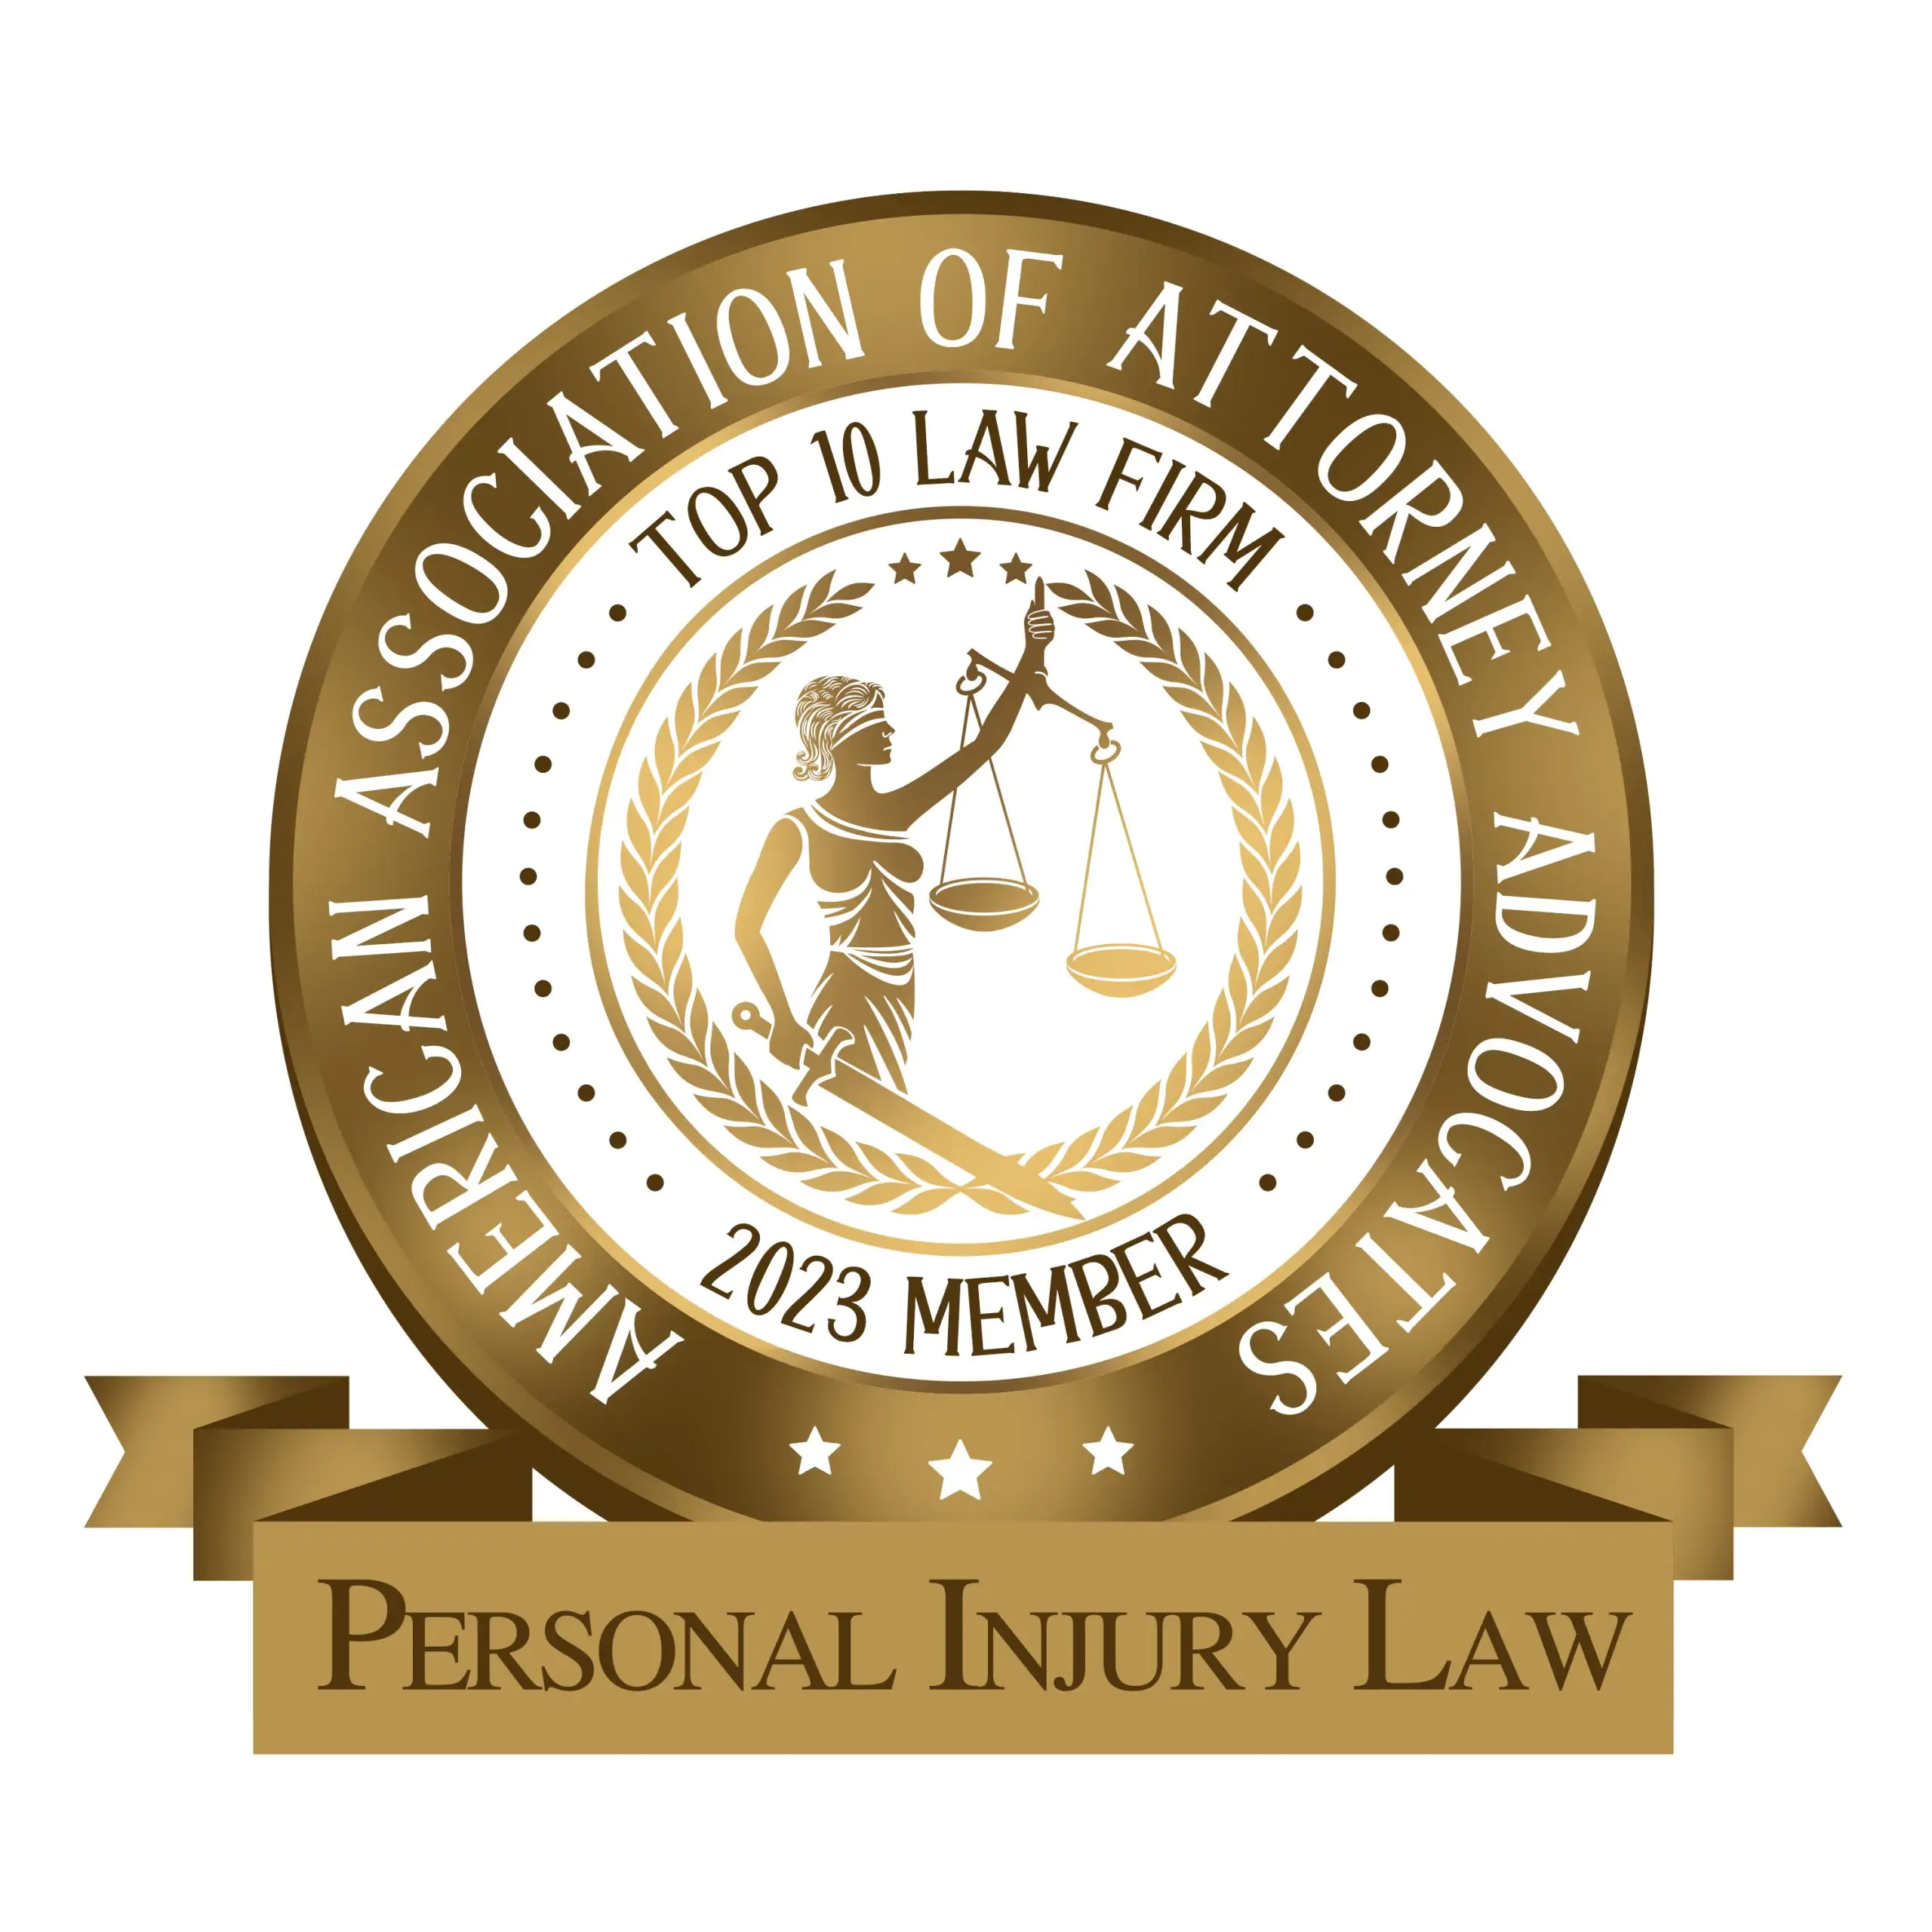 Sobo & Sobo Personal Injury Lawyers top 10 law firm award